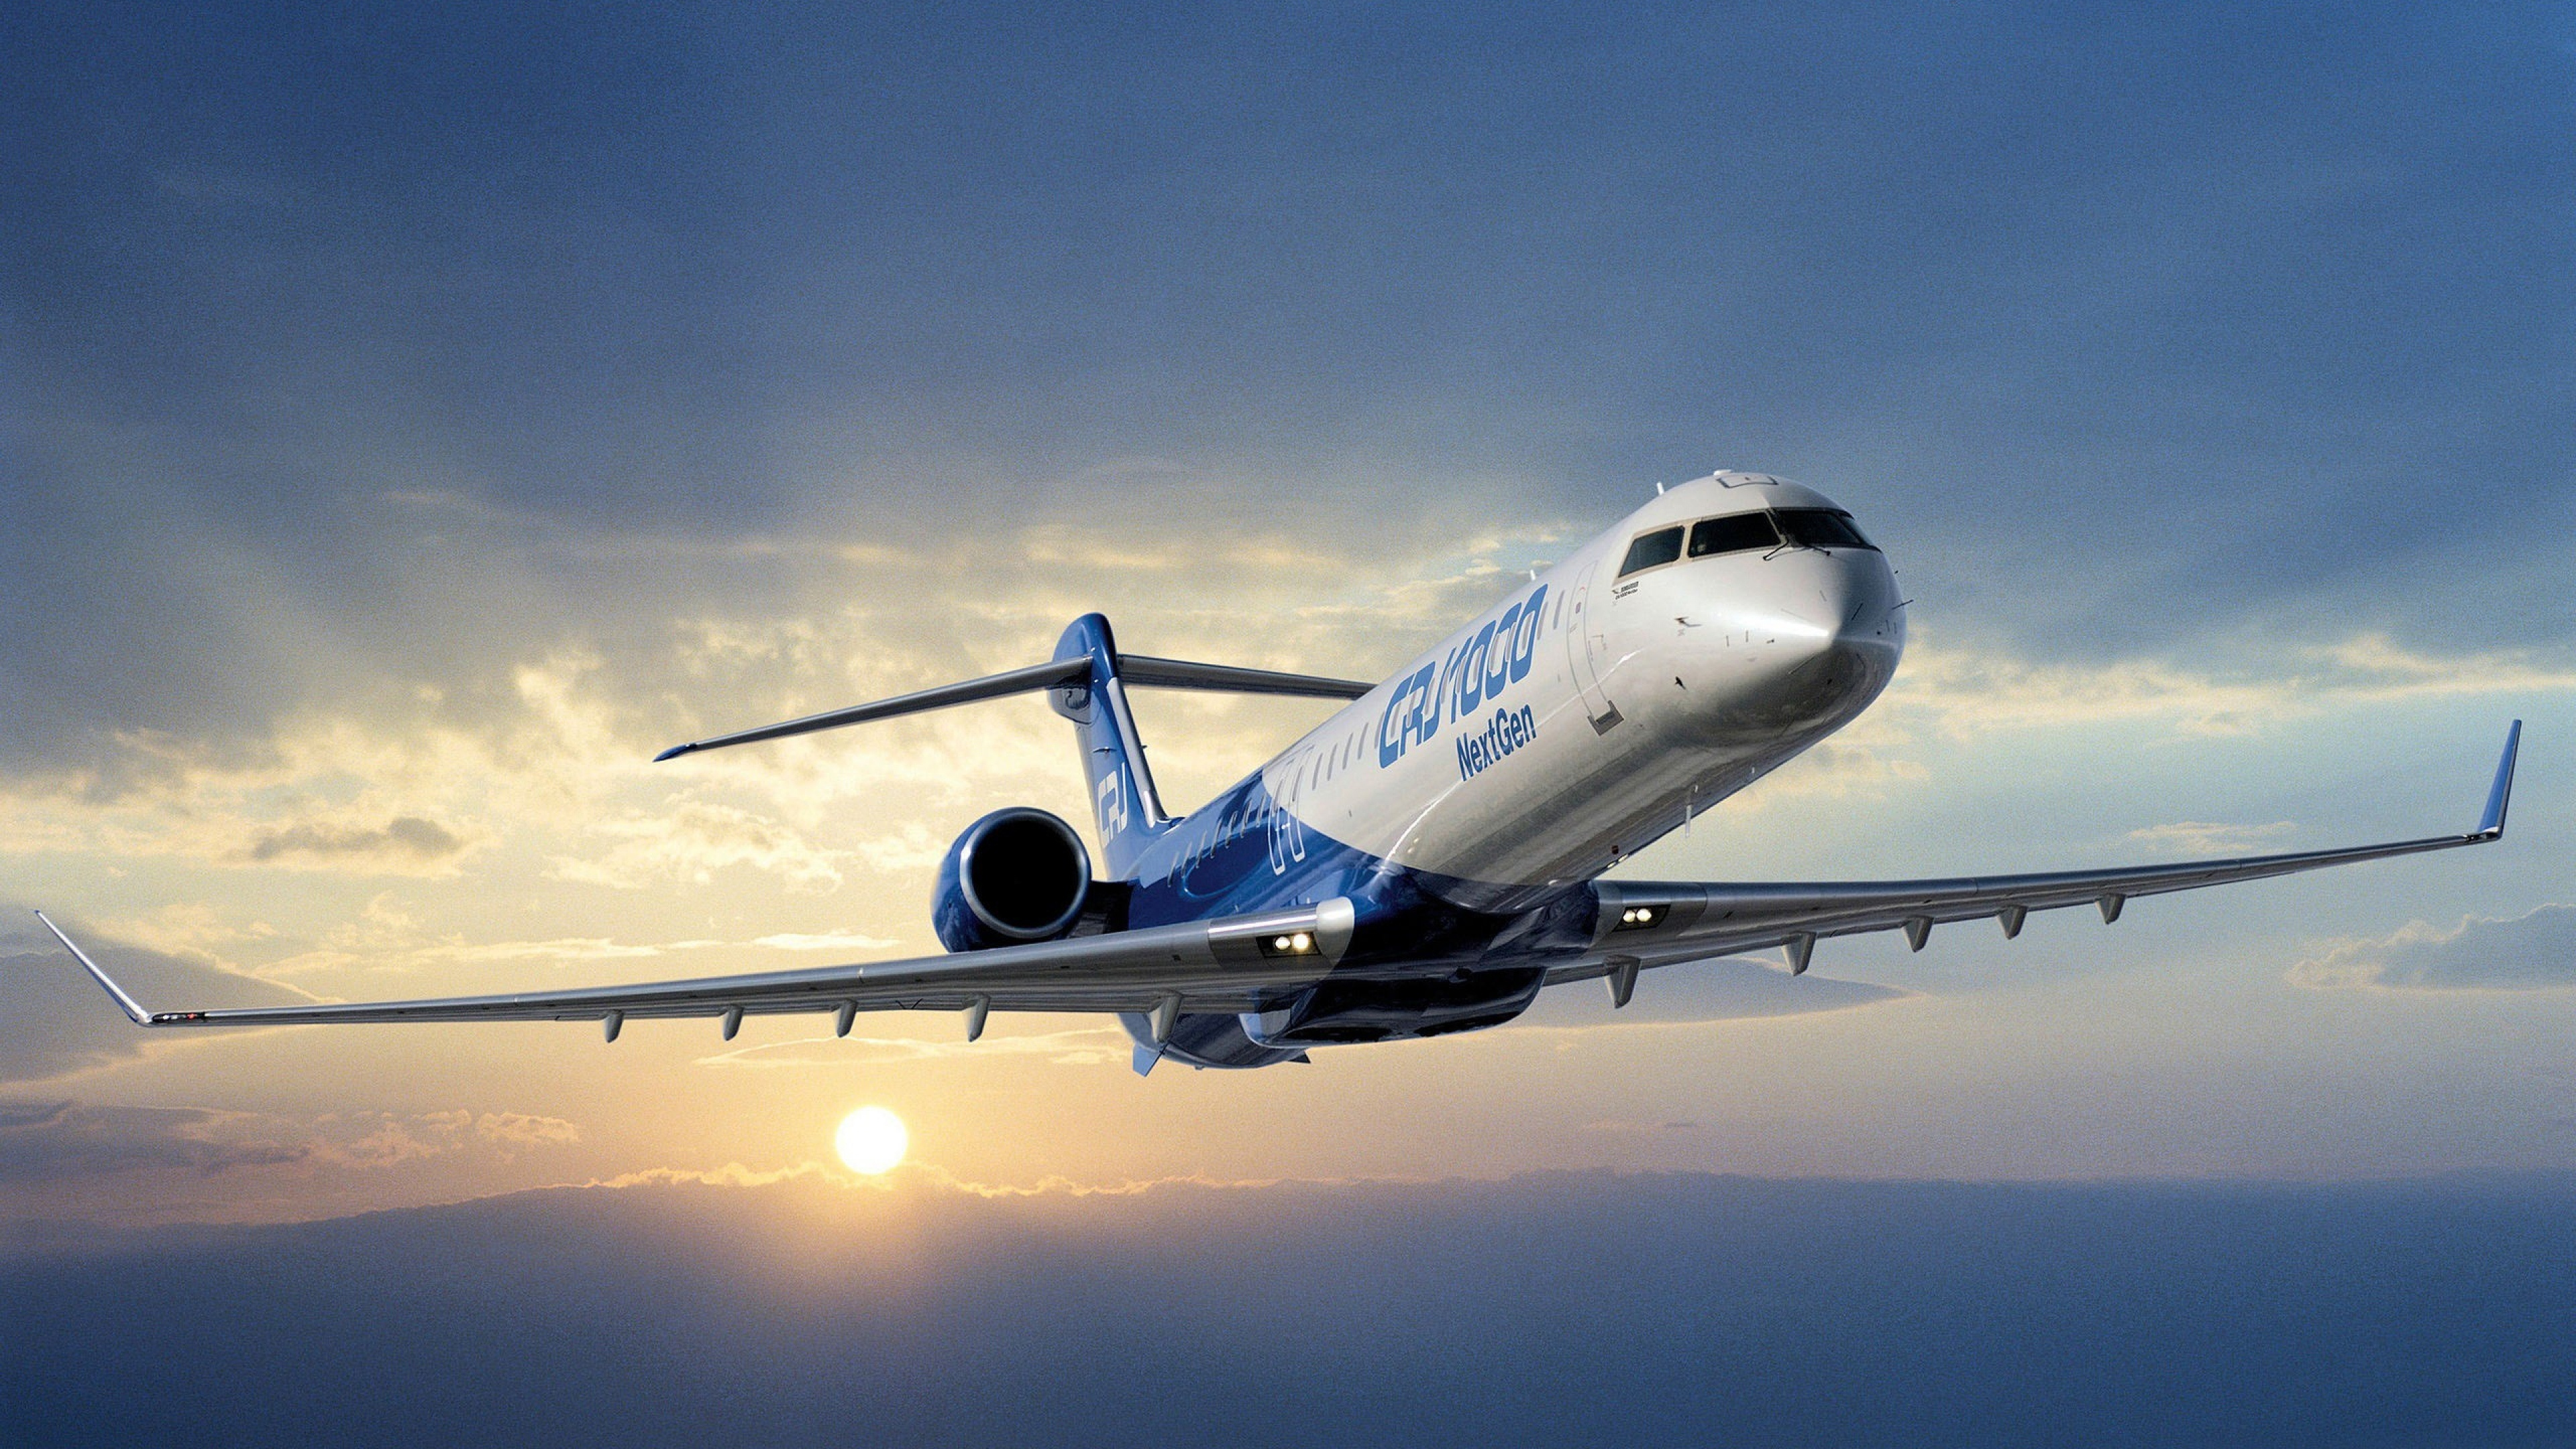 White and Blue Passenger Plane in Flight. Wallpaper in 3840x2160 Resolution